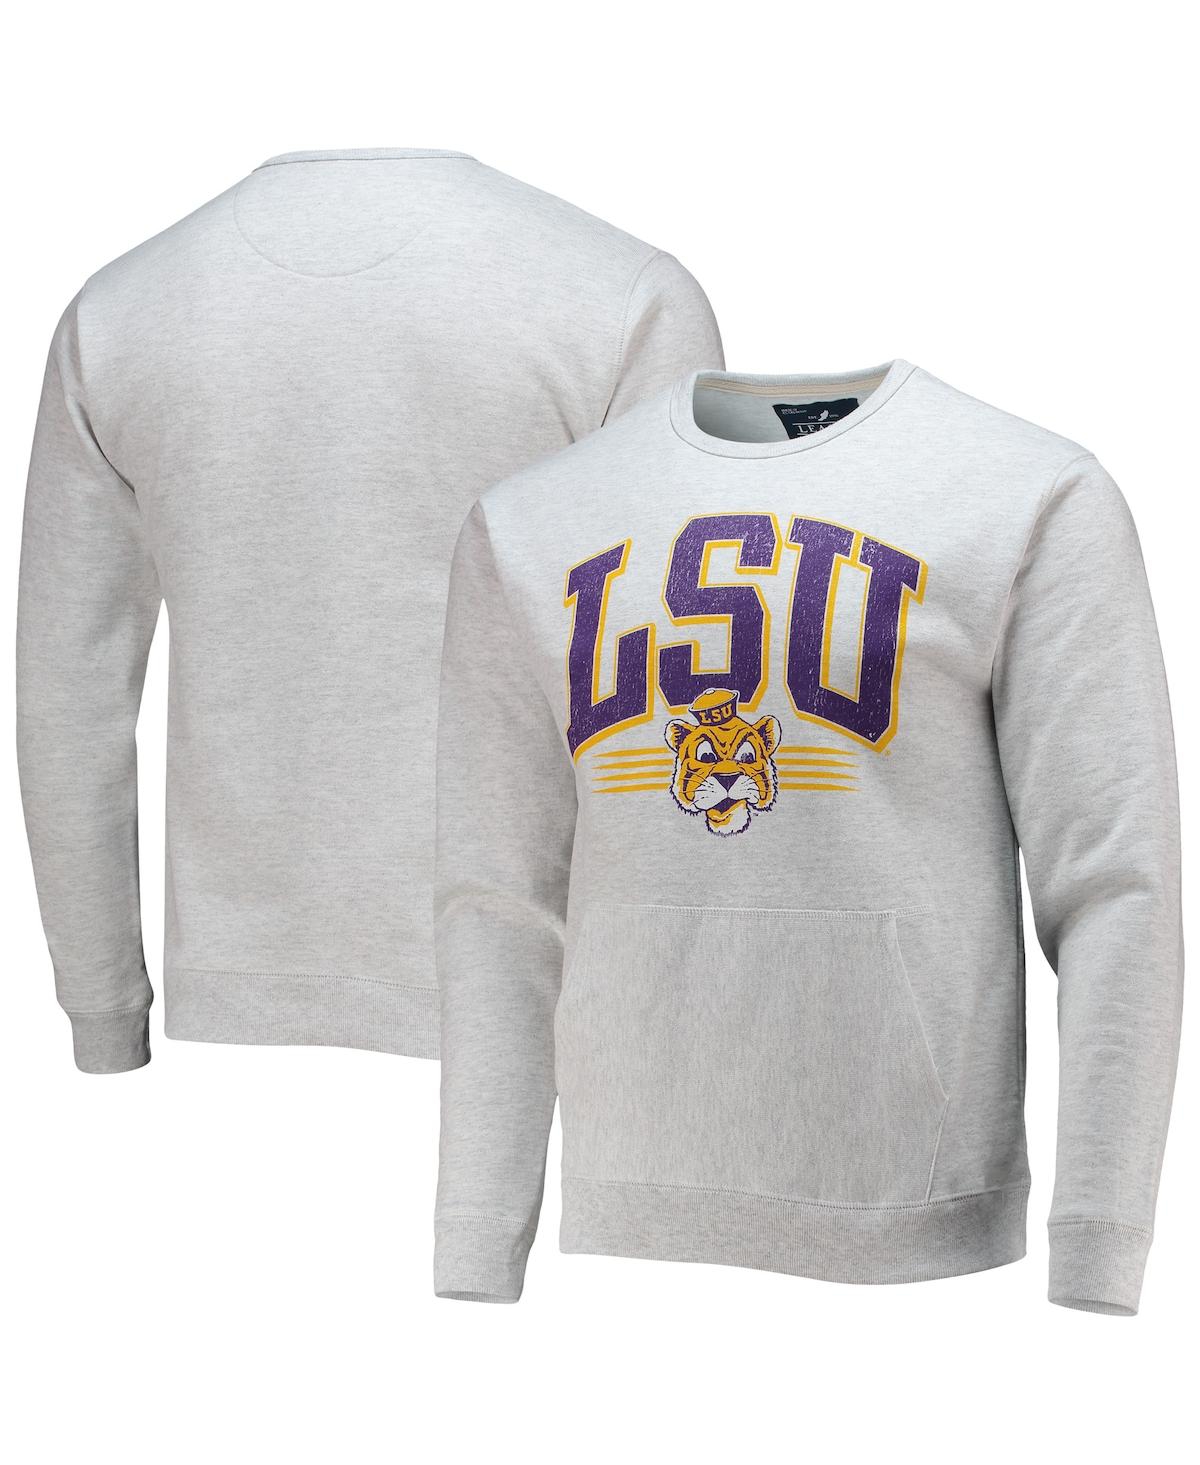 League Collegiate Wear Men's  Heathered Gray Lsu Tigers Upperclassman Pocket Pullover Sweatshirt